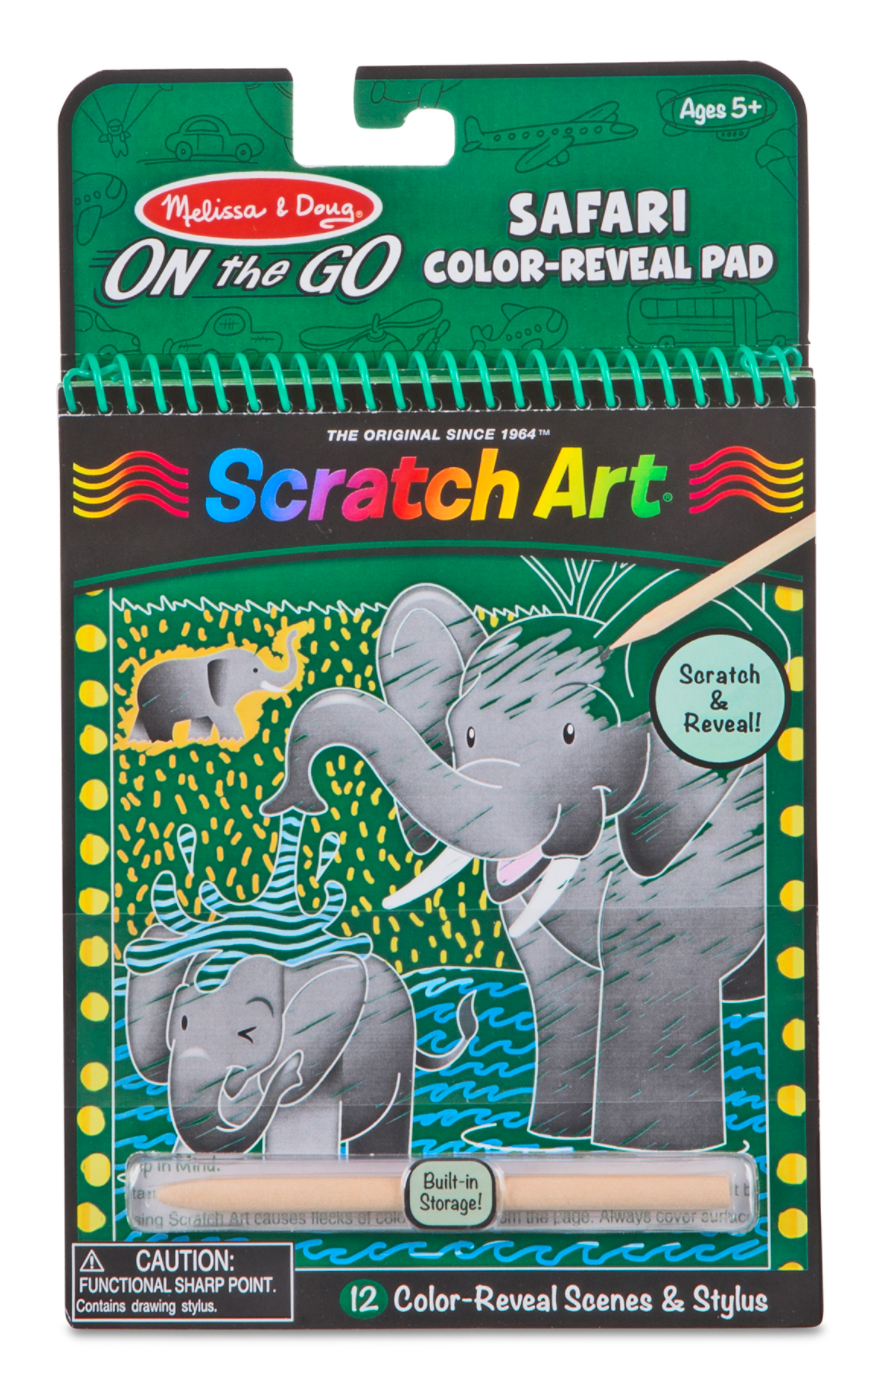 On the Go Scratch Art Reveal Pad - Safari